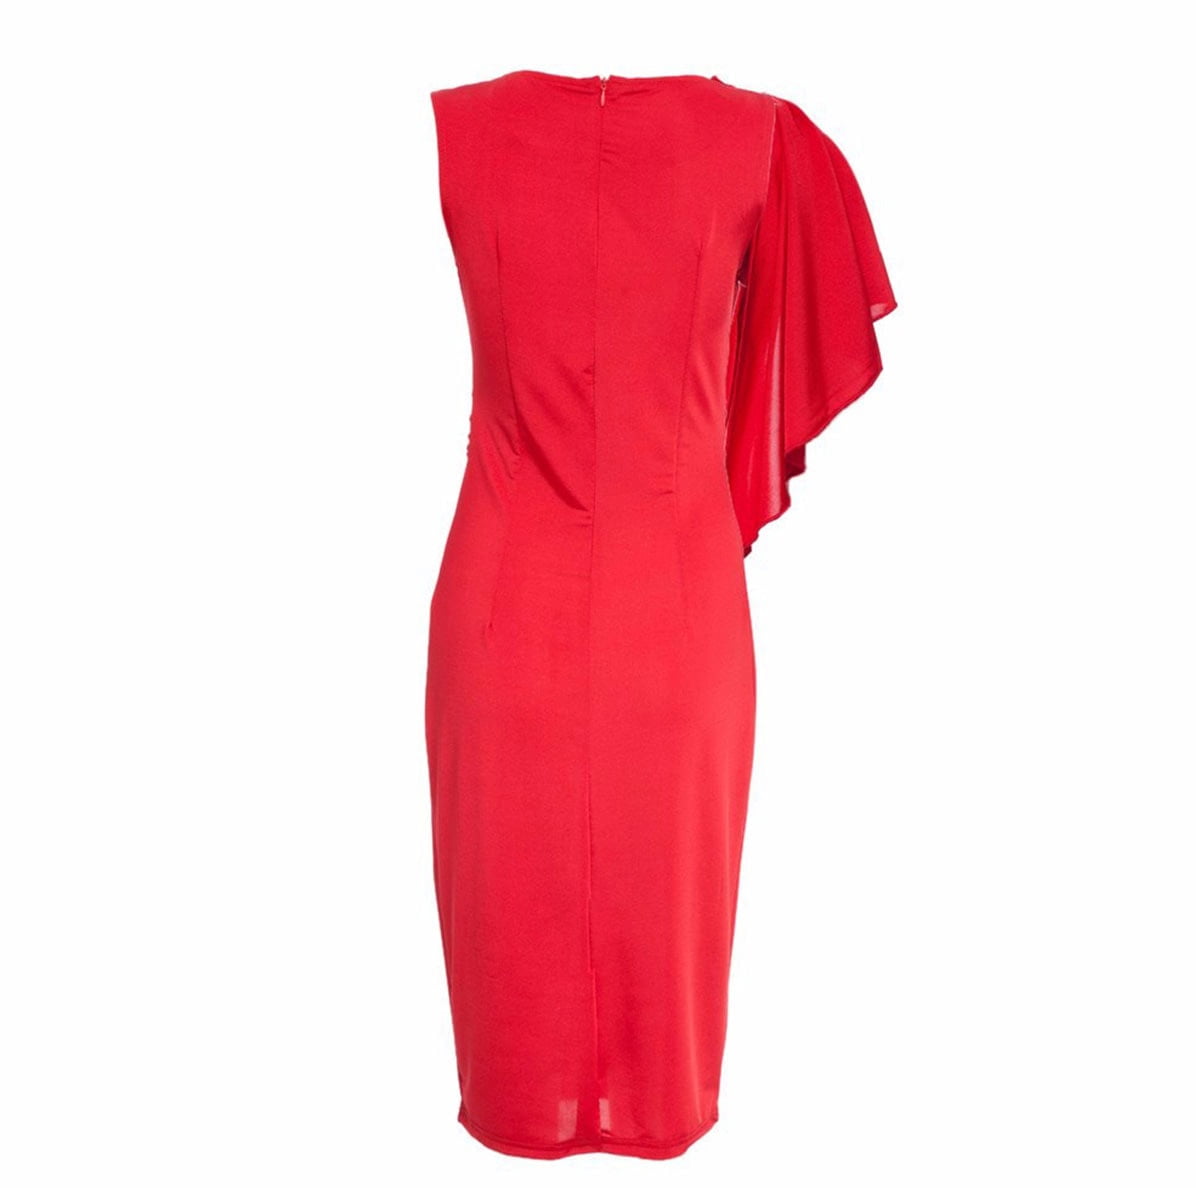 M0188 red6 Short Sleeve Dresses maureens.com boutique